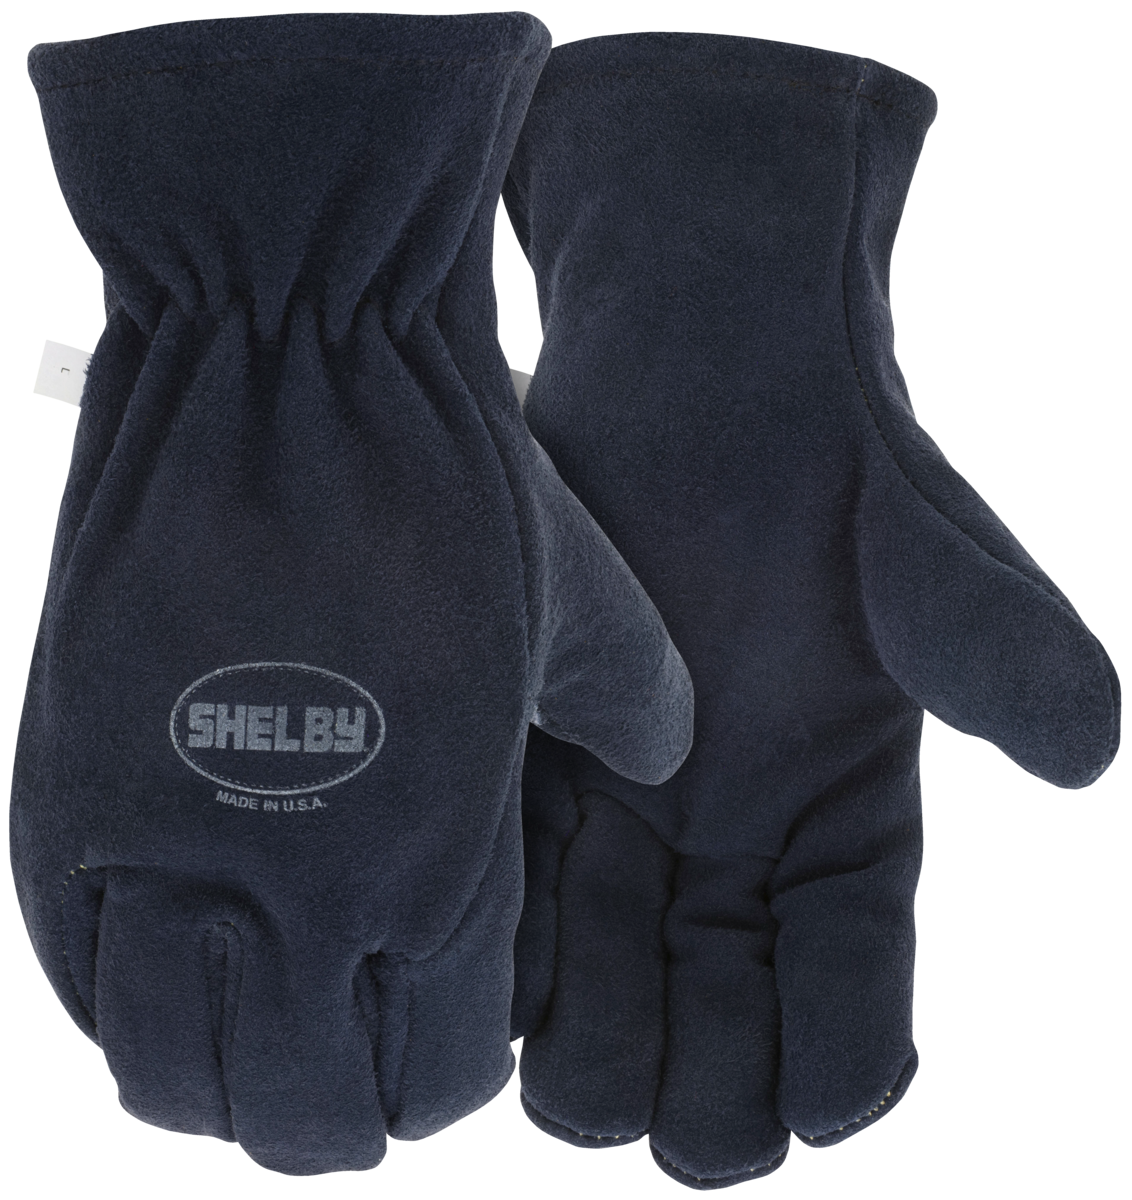 5228 - Shelby® Fire Glove Gauntlet